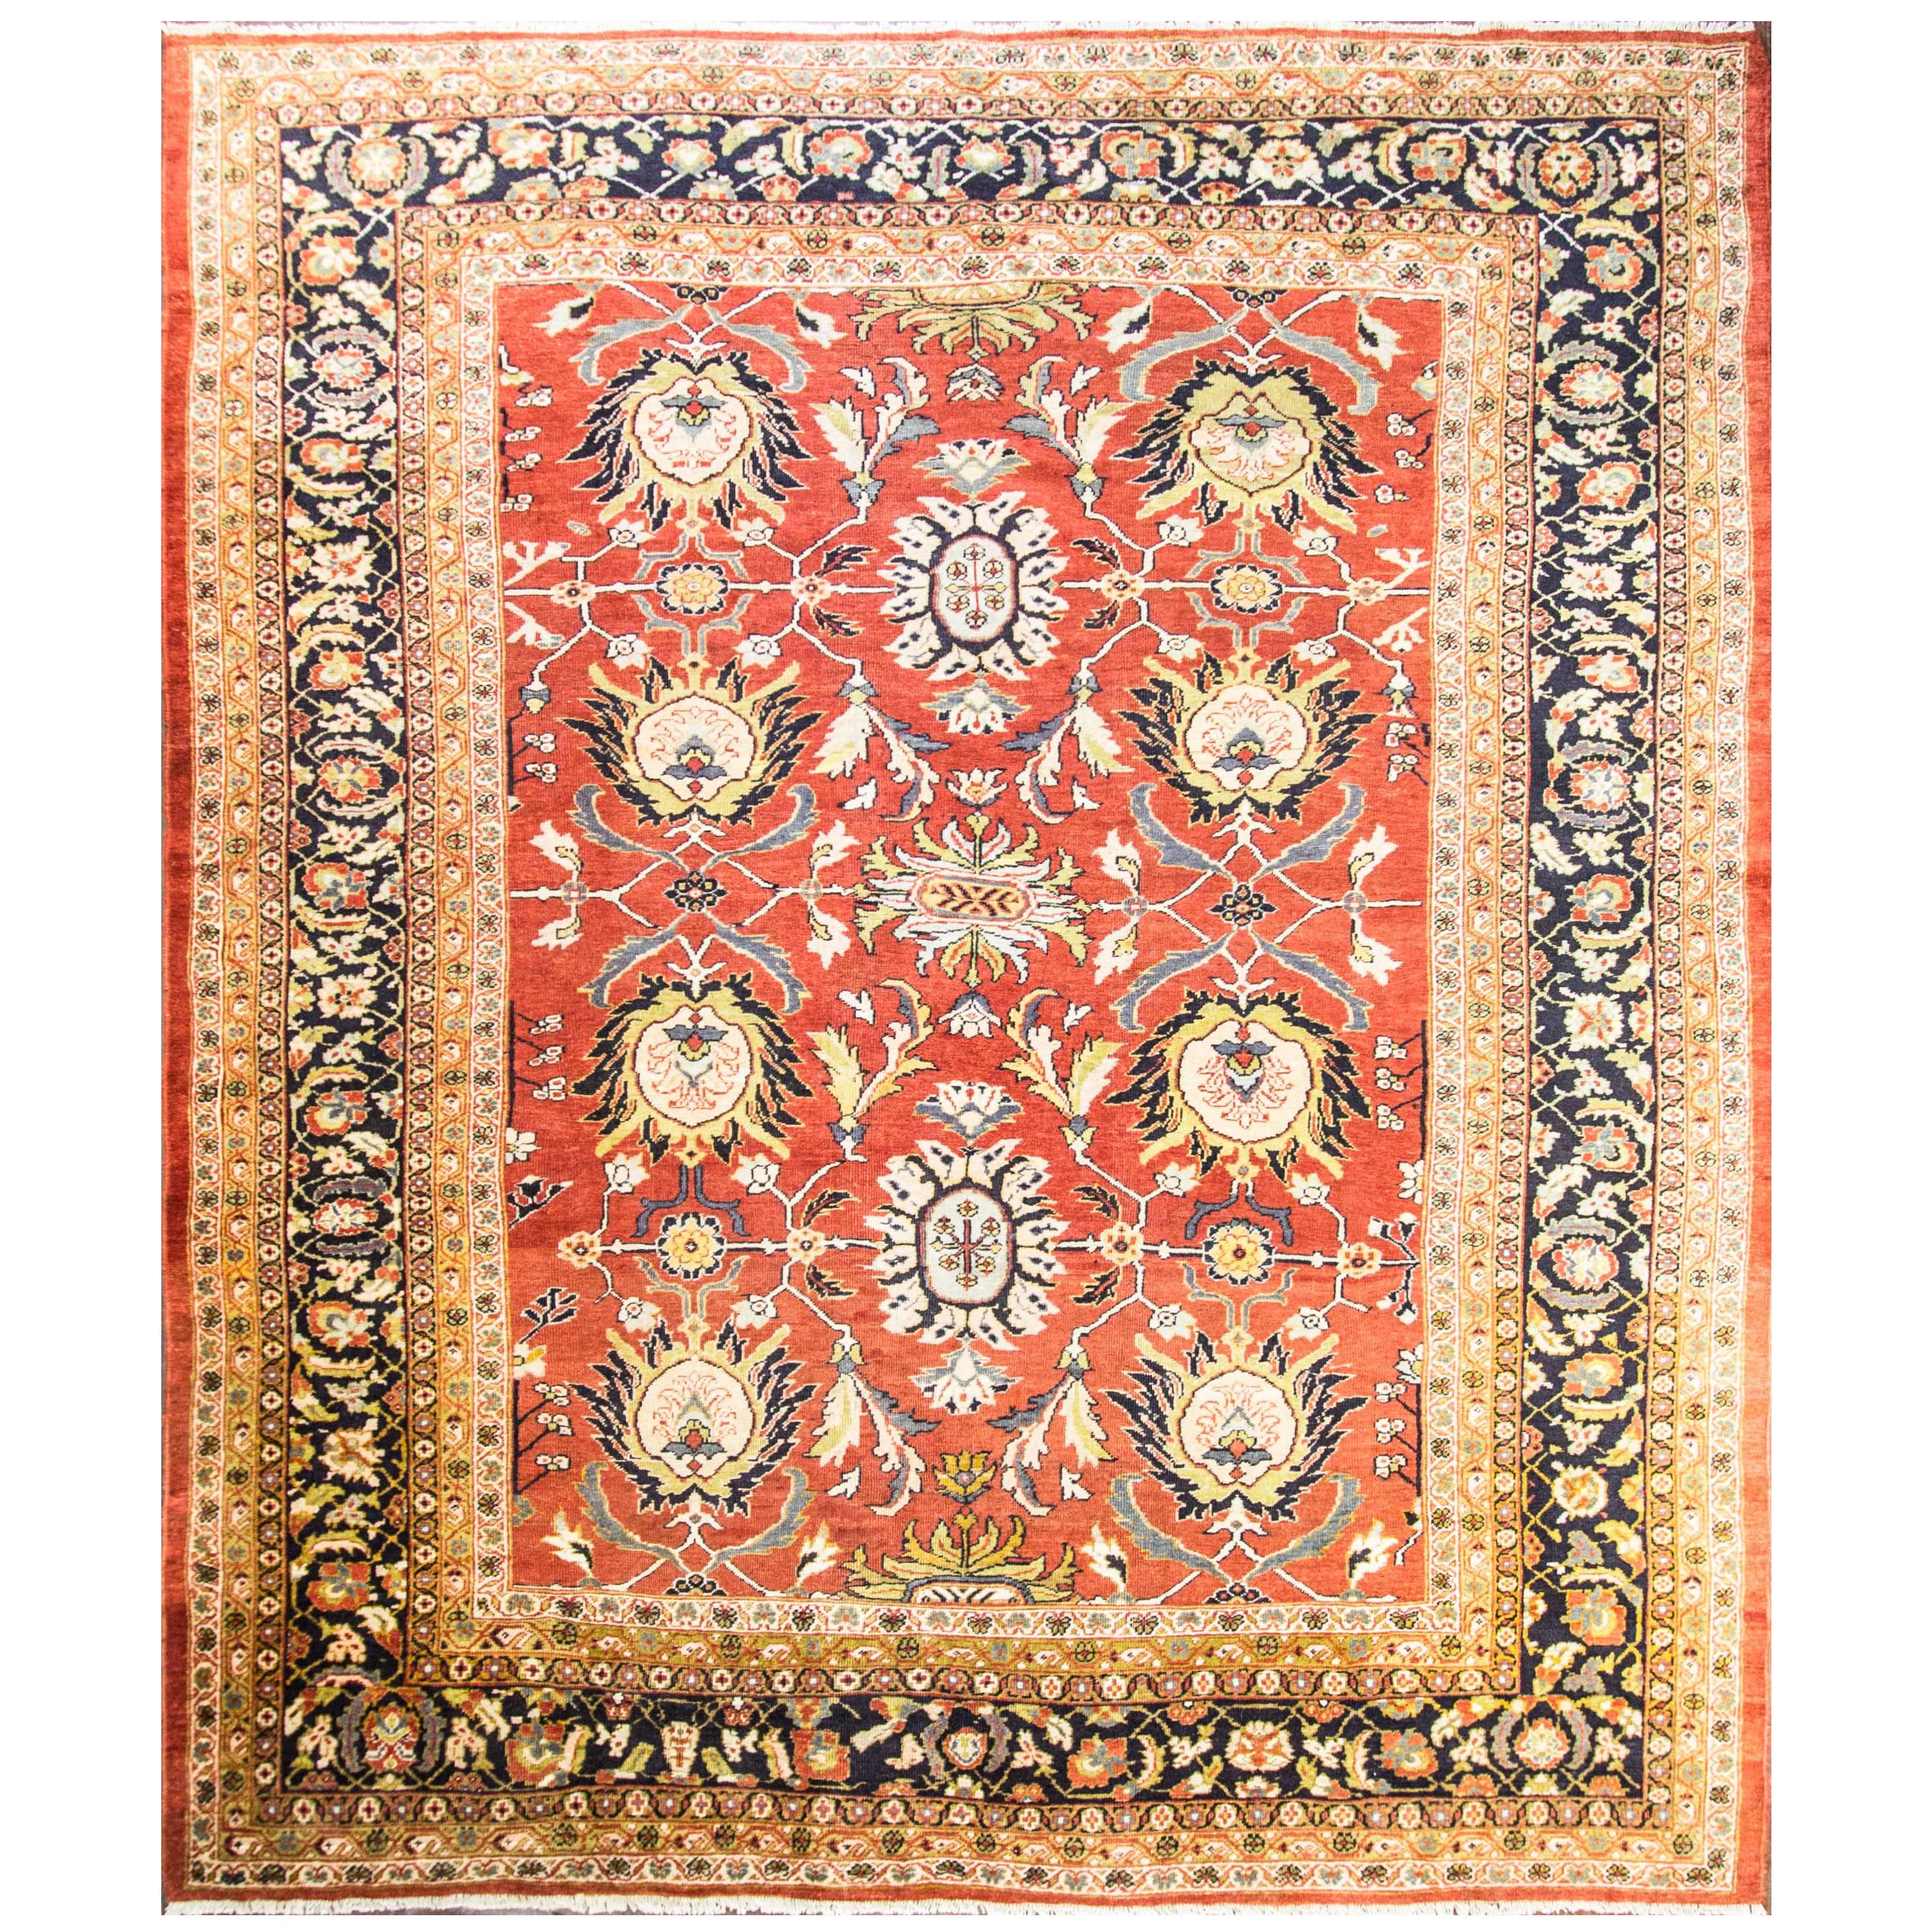 Superbe tapis persan ancien de Sultanabad